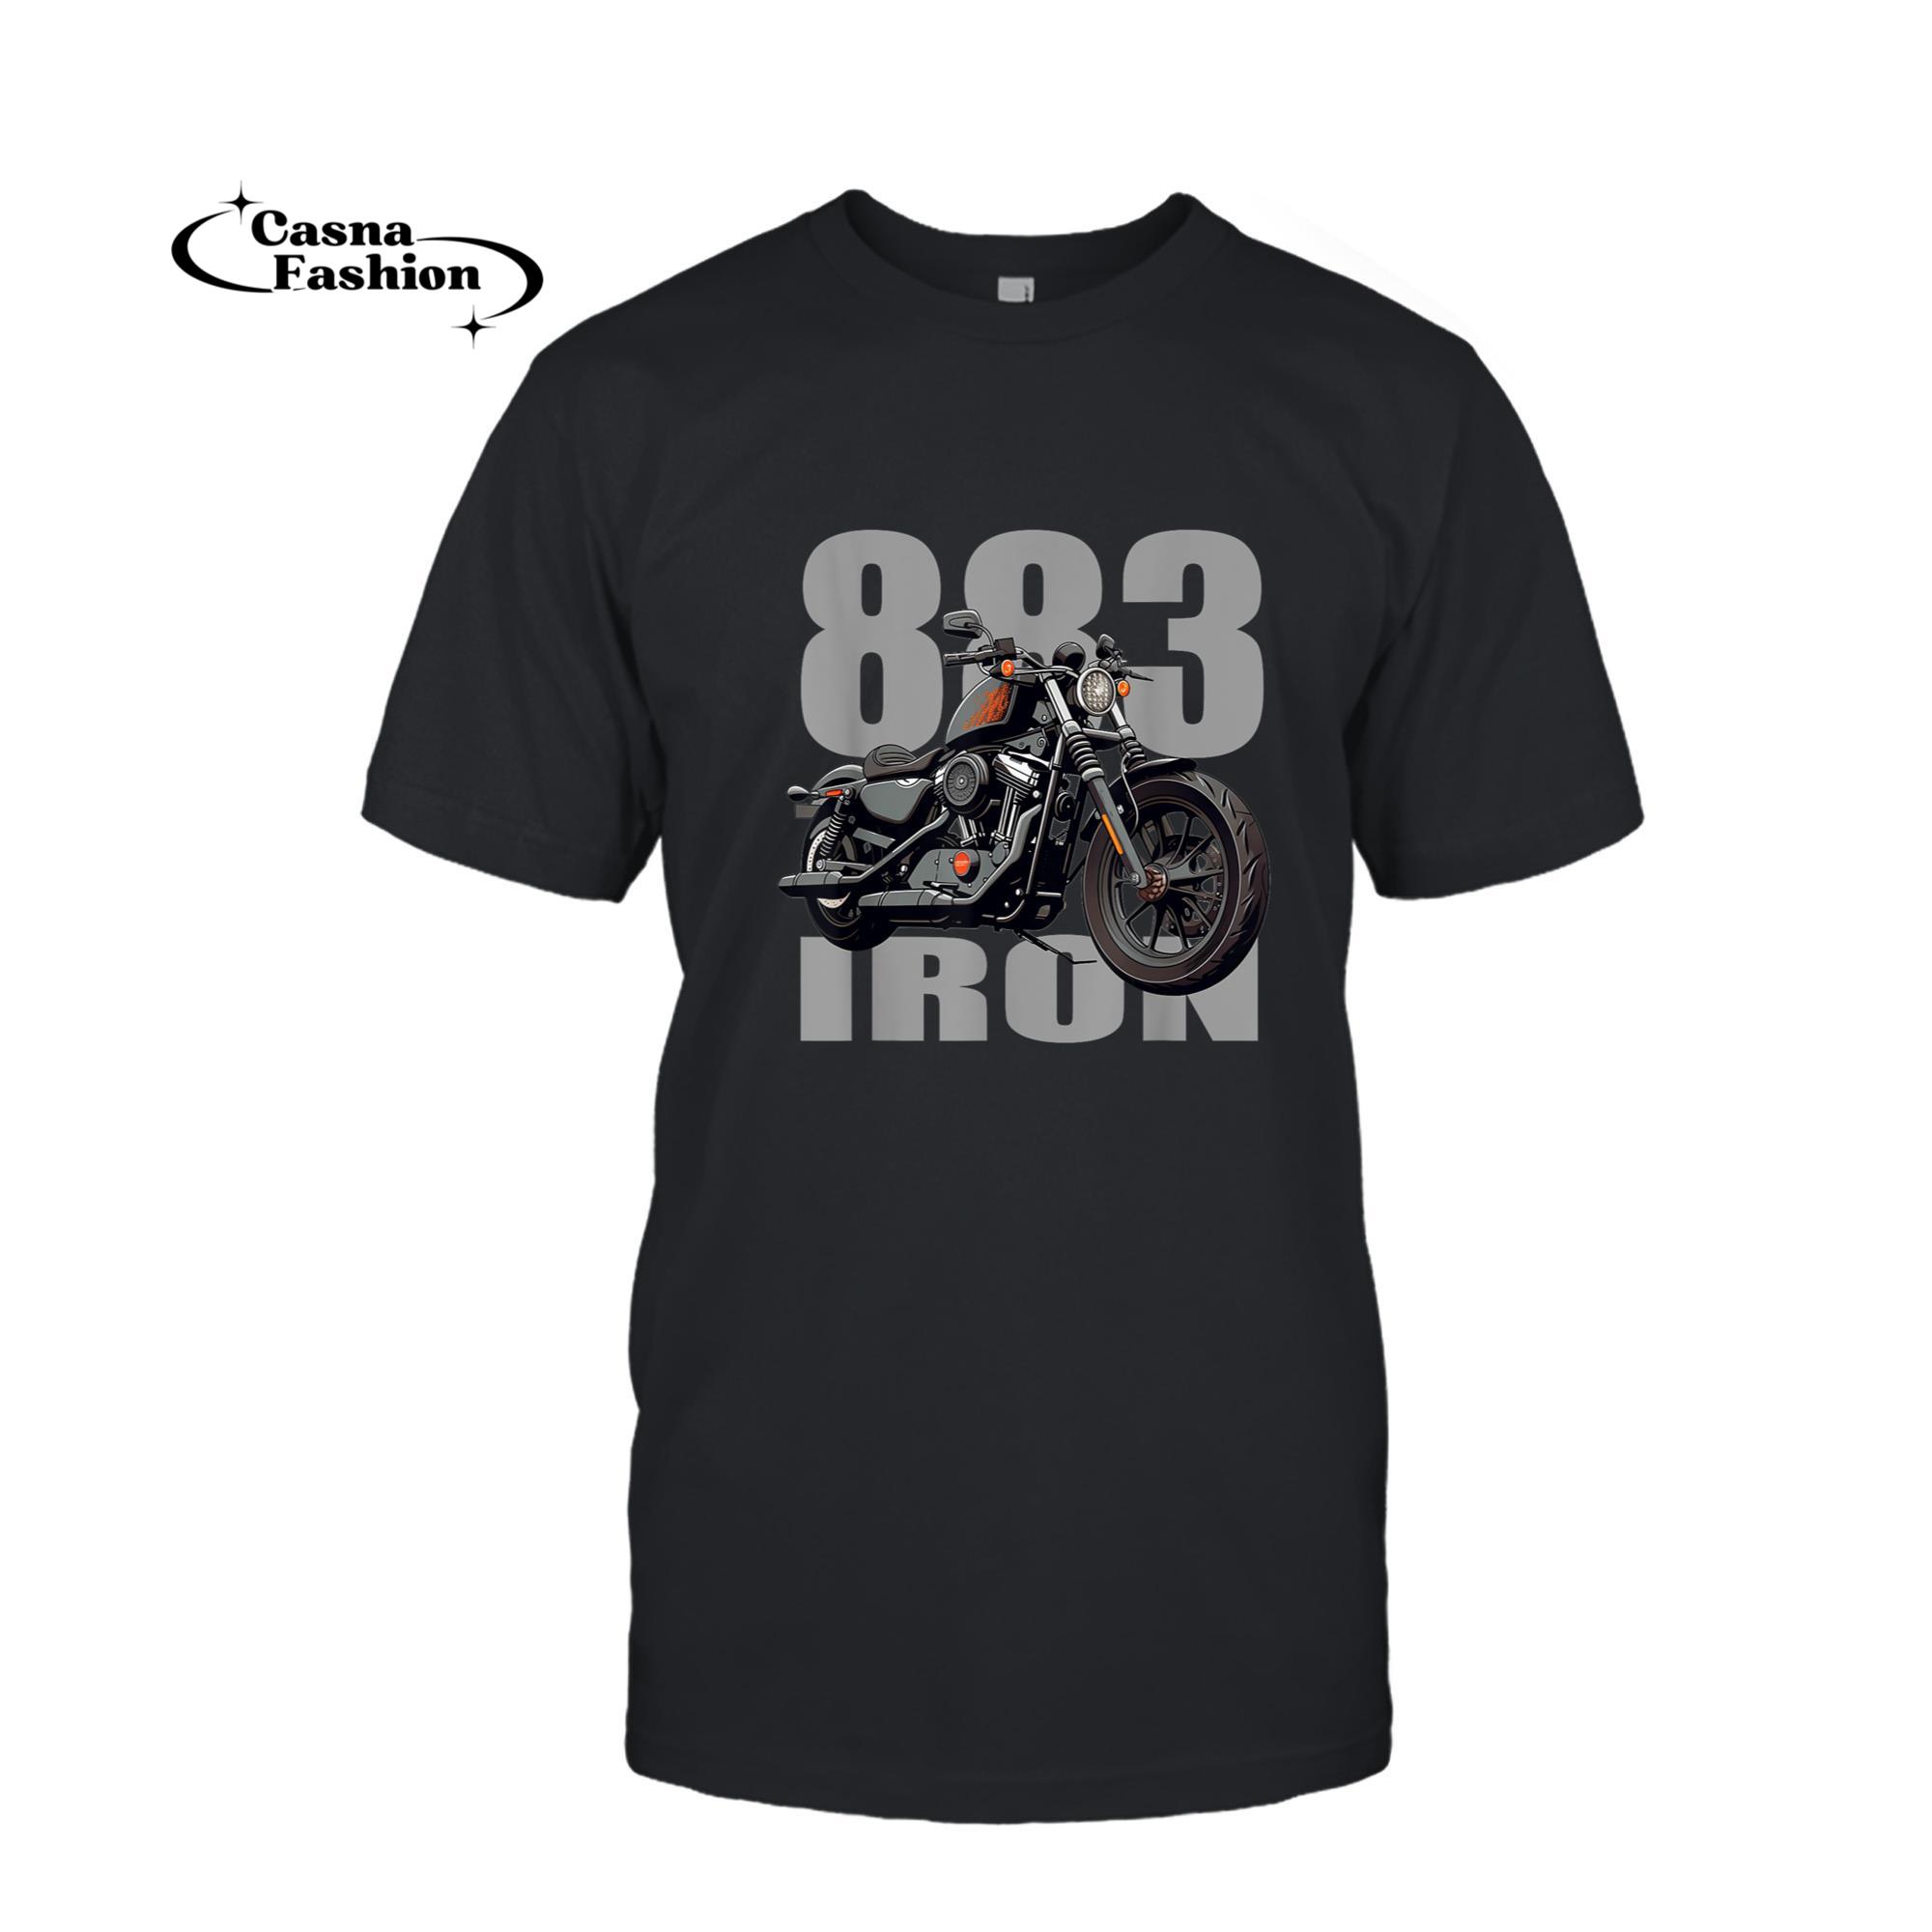 casnafashion_T-shirt_883 Iron Classic Motorcycle Biker T-Shirt_T-shirt_Black